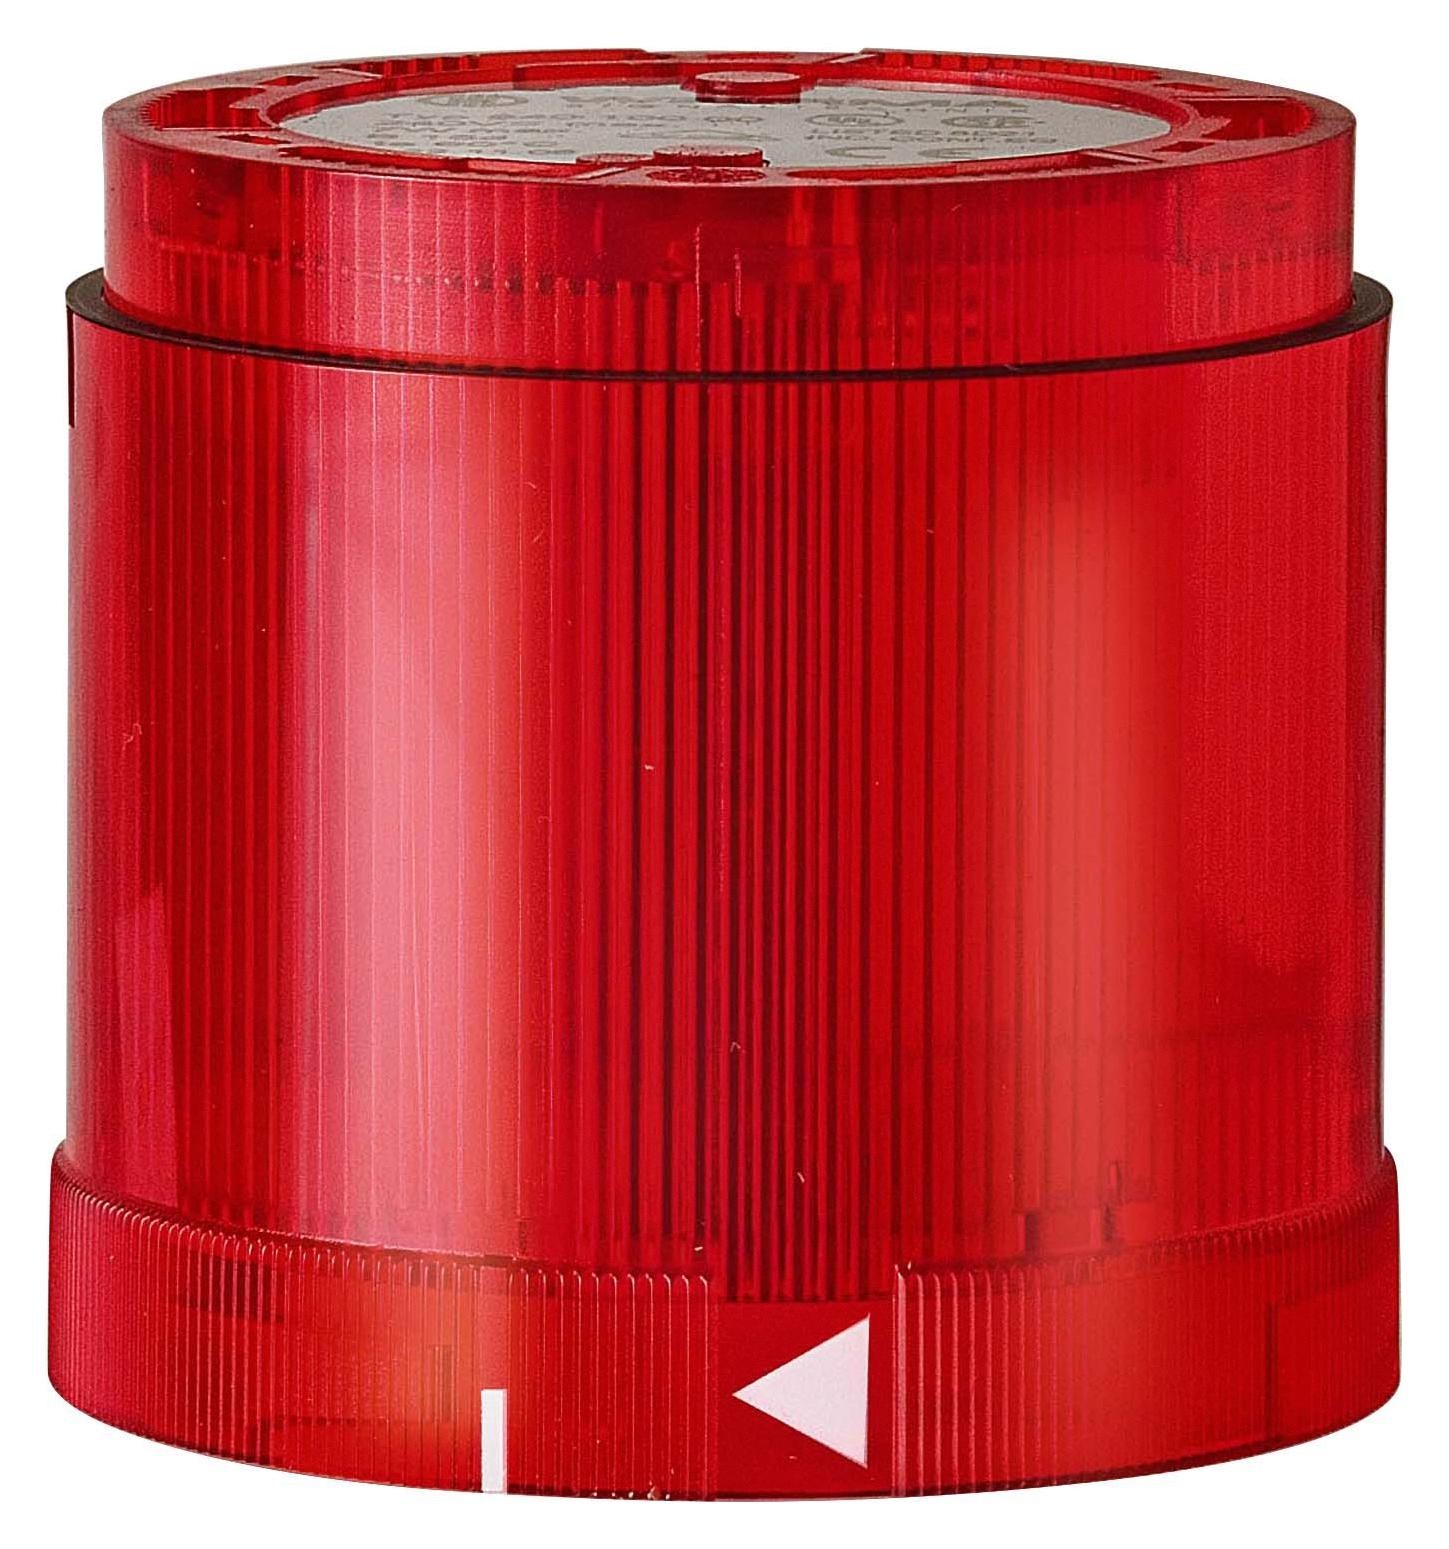 WERMA 84010000 Beacon, Filament, Steady, Red, 230Vac/dc